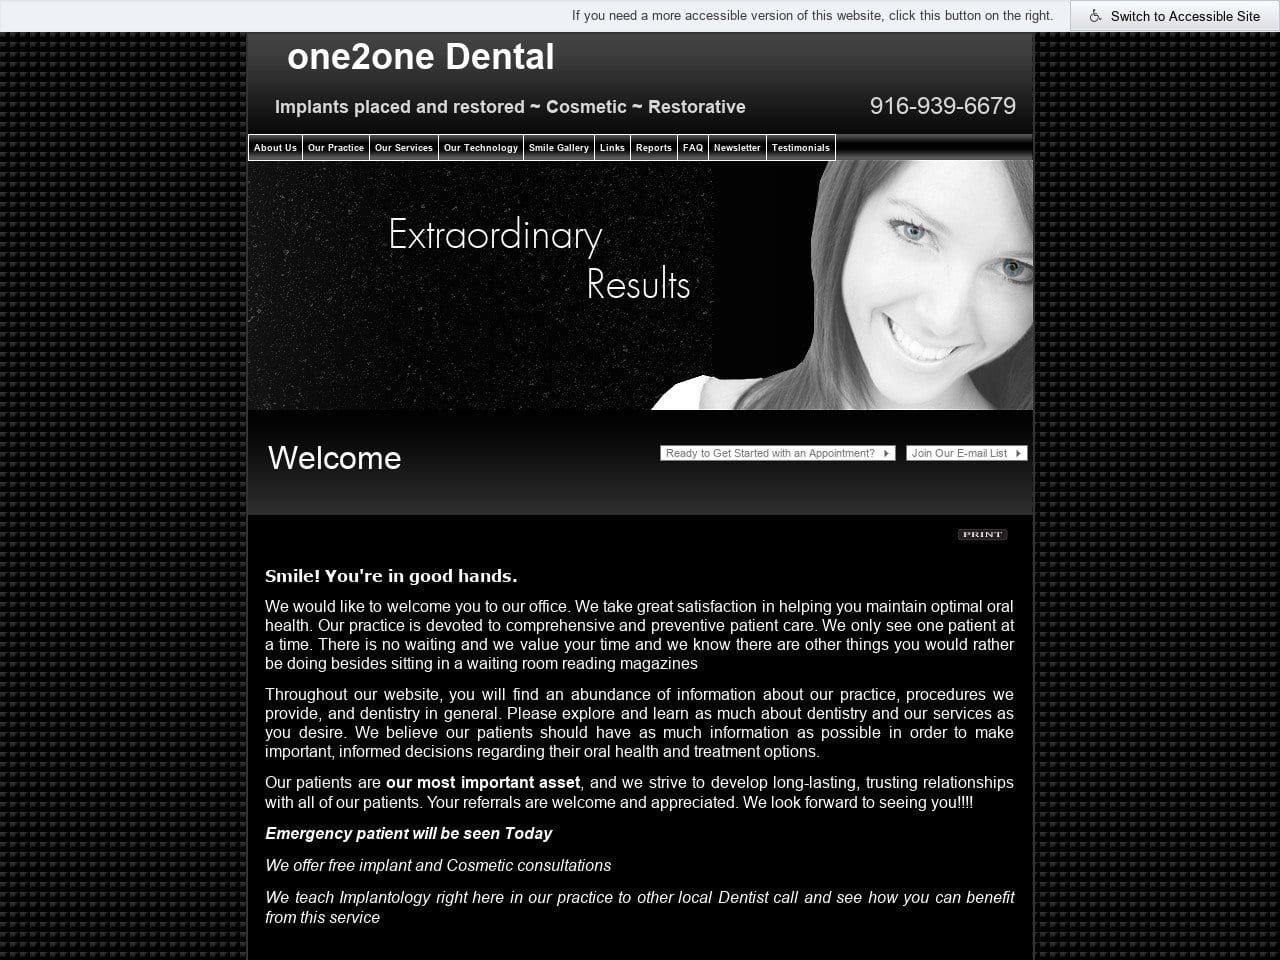 One 2 One Dental Website Screenshot from granitebaydentist.com